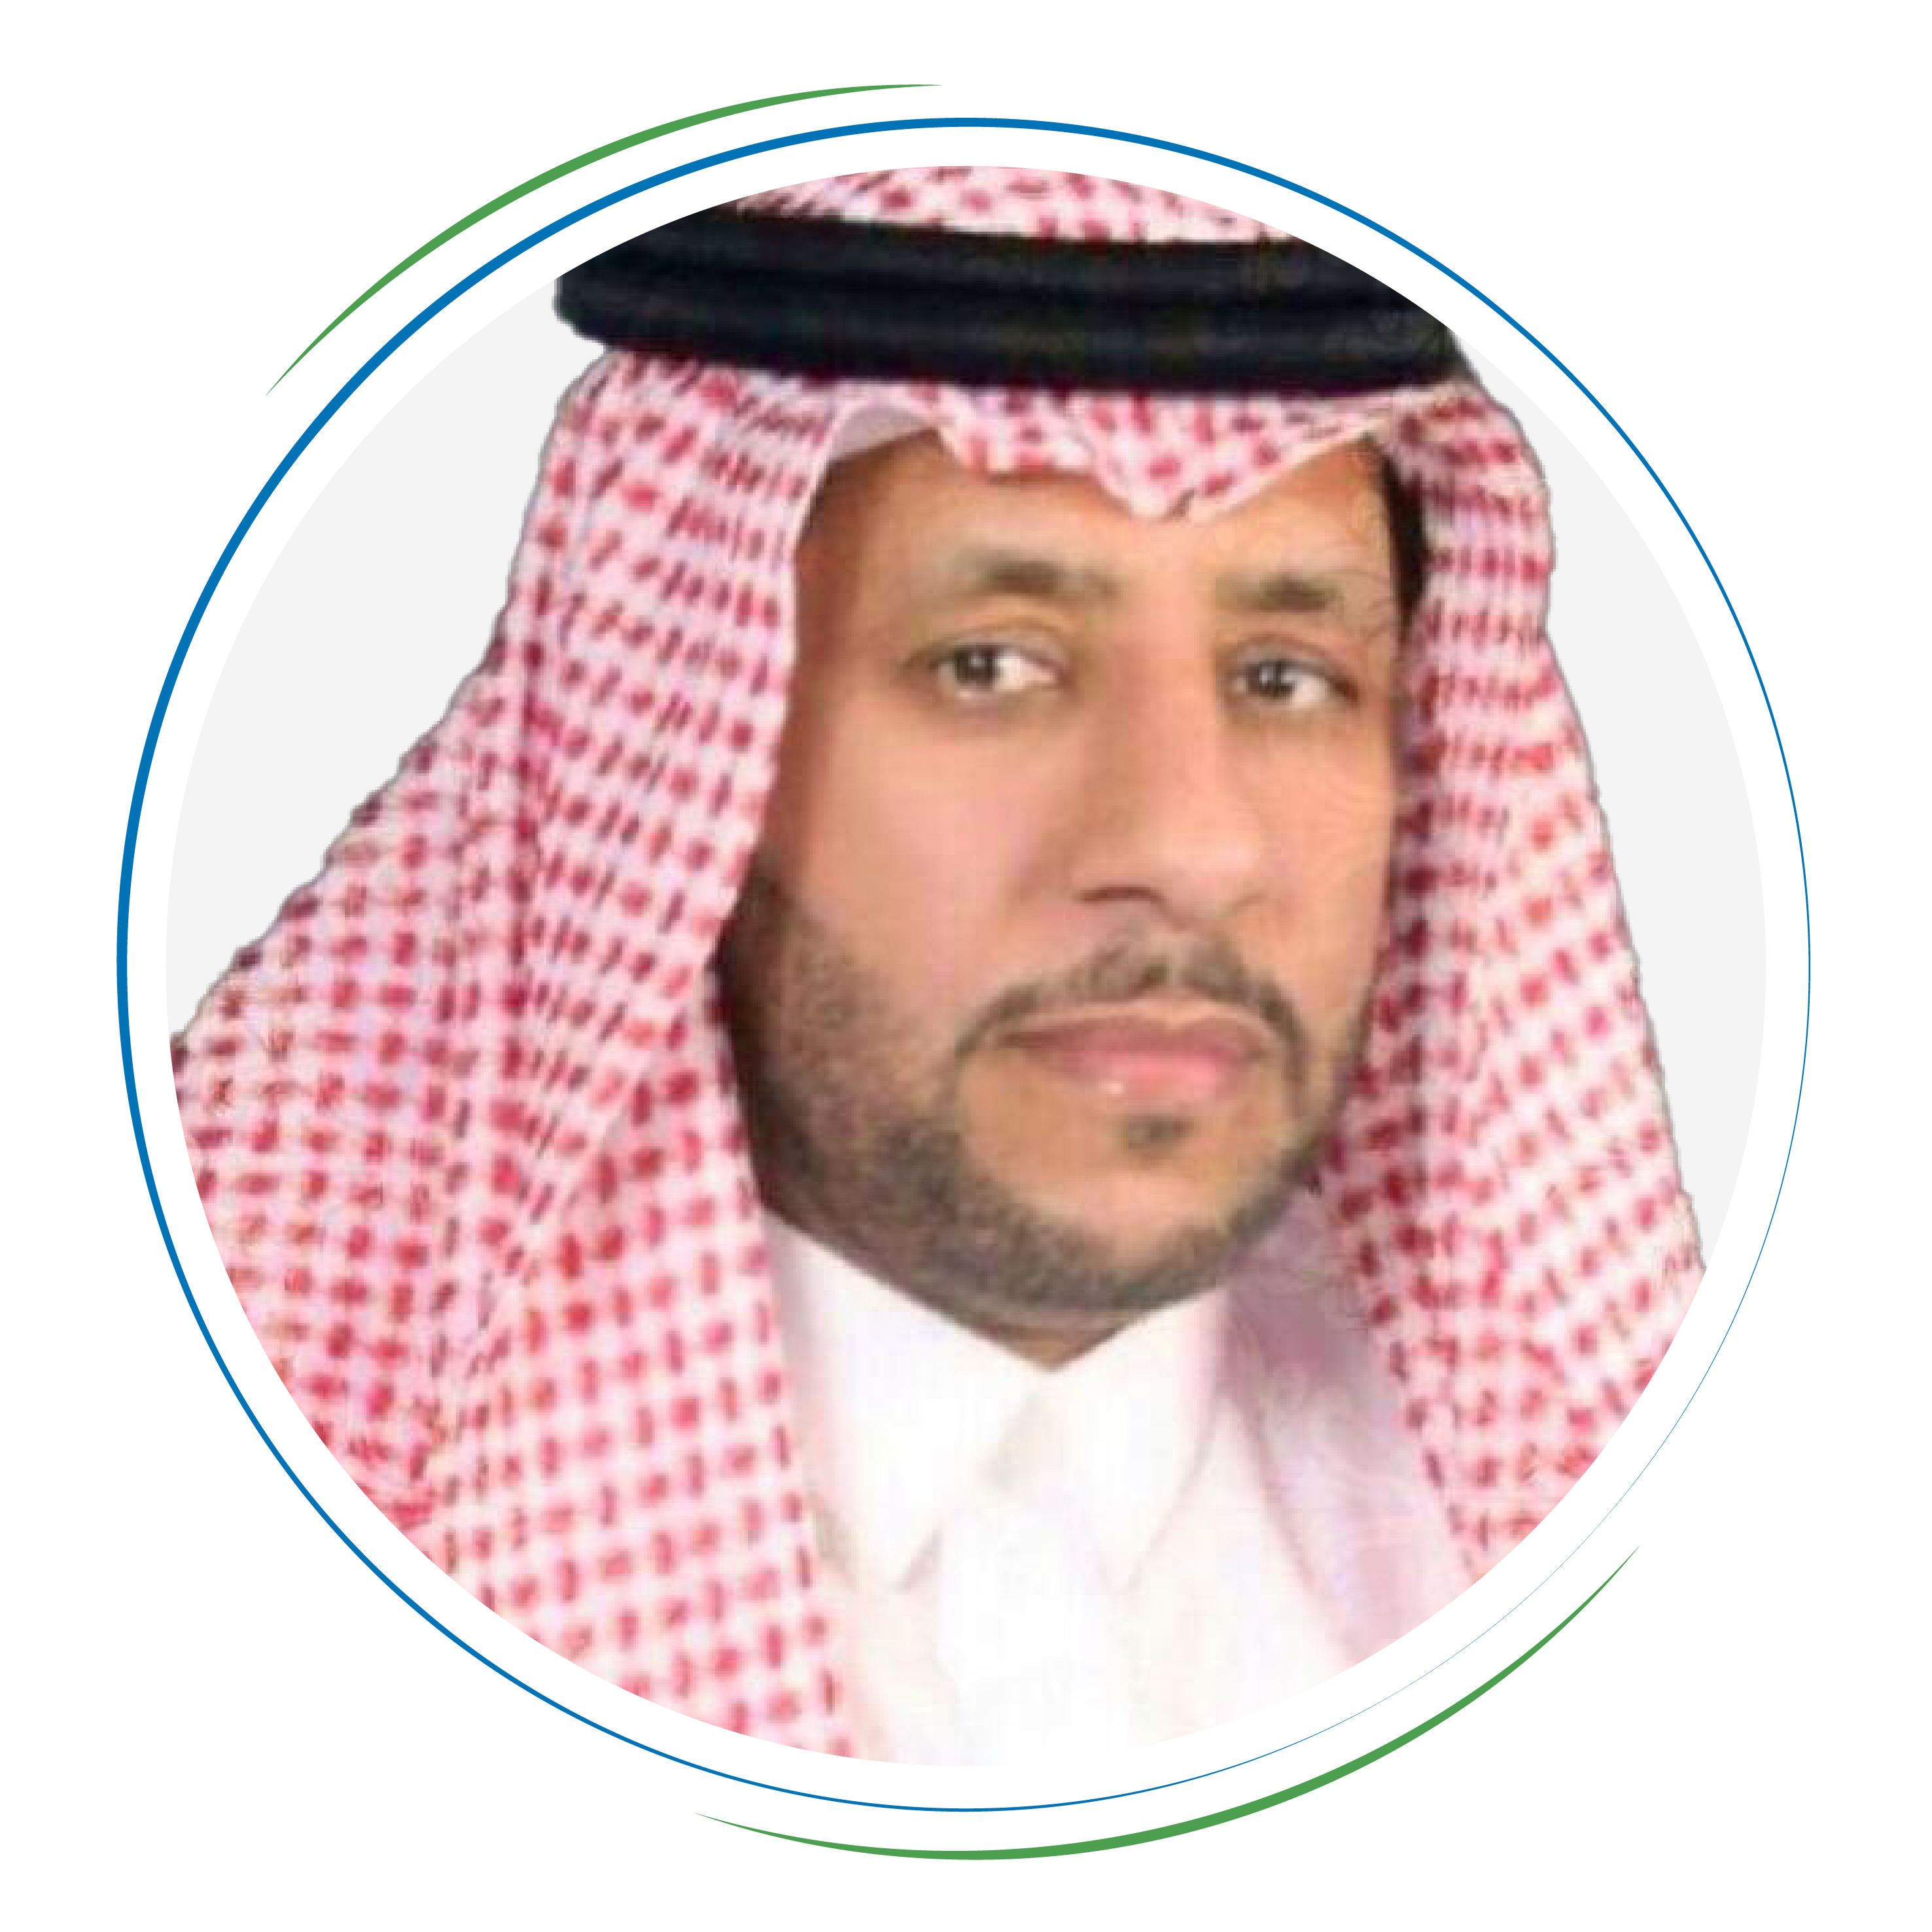 Mr. Hashal bin Sulaiman Alhamdan